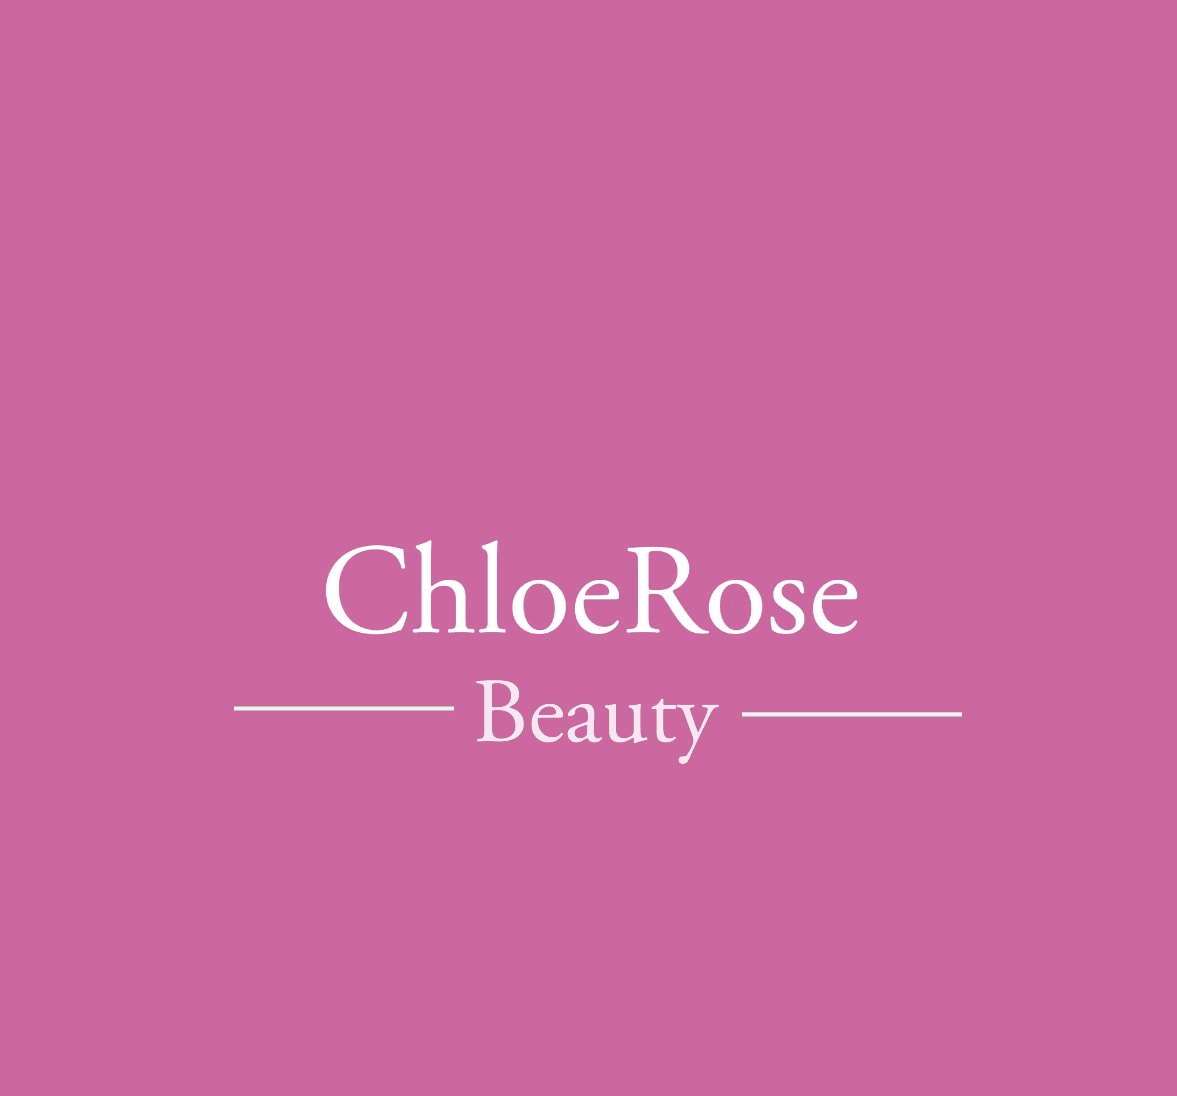 Chloe Rose Beauty